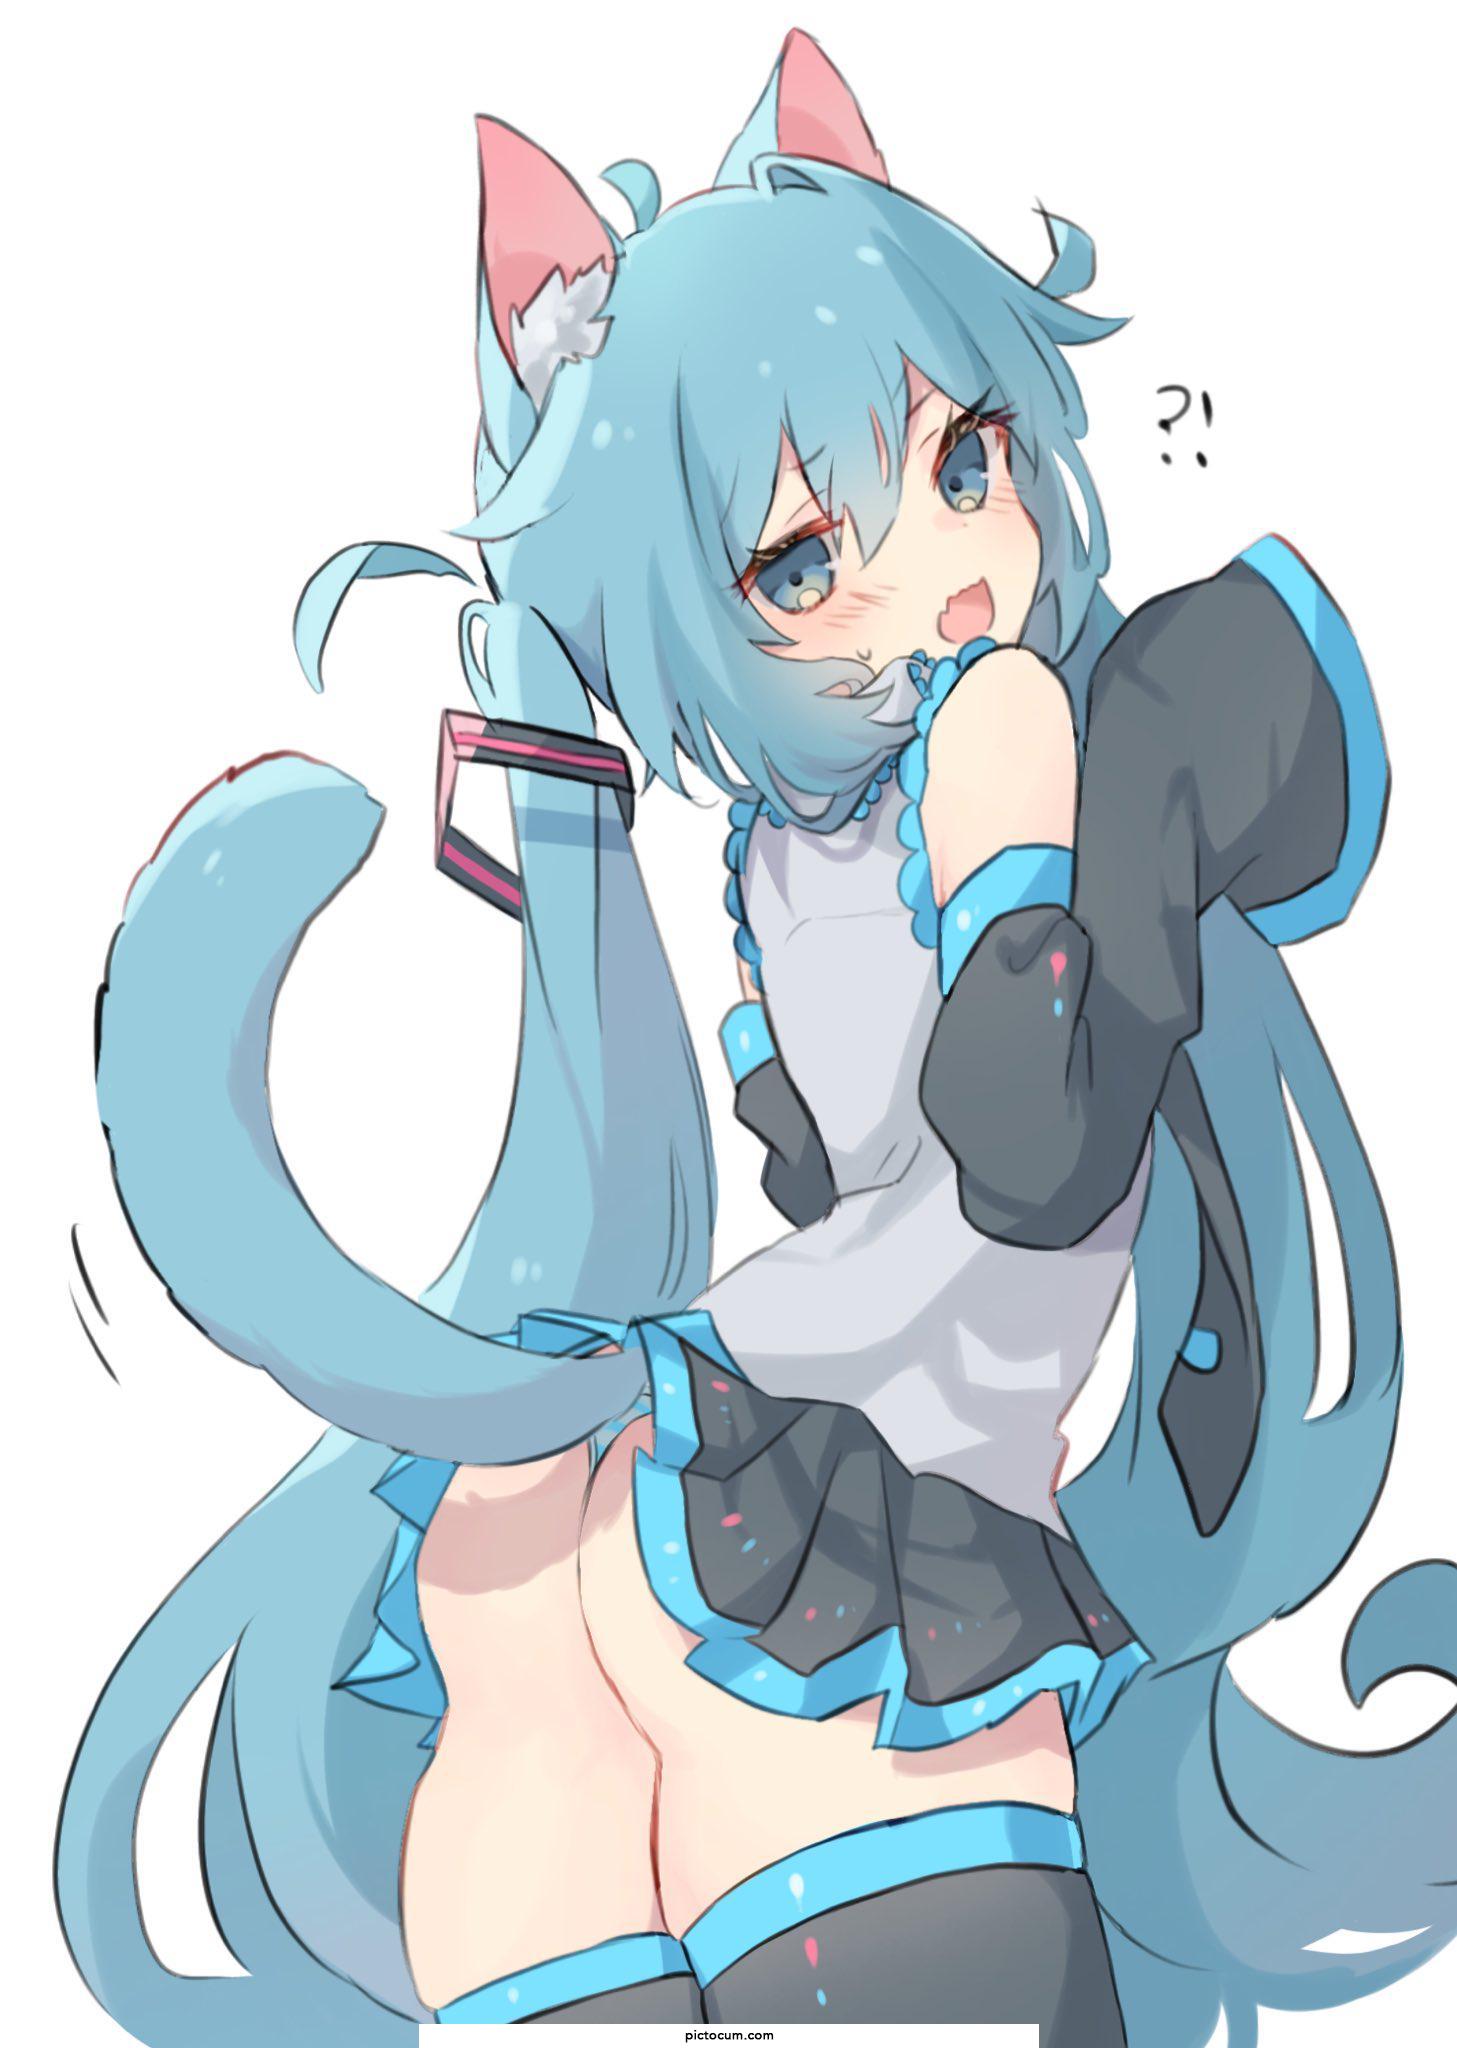 Miku-San please put on some cat ears!